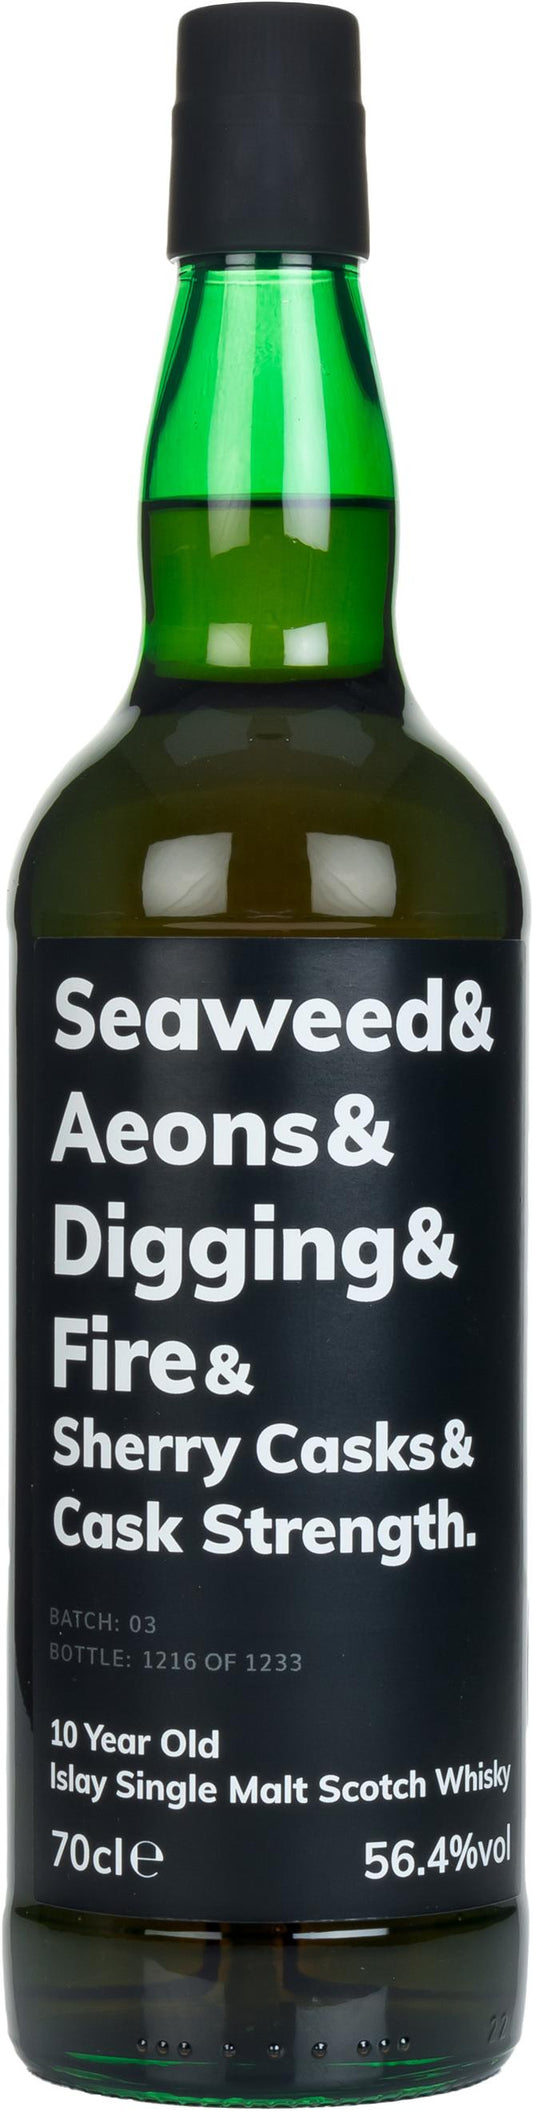 Seaweed & Aeons & Digging & Fire & Sherry Casks & Cask Strength 10 Year Old Single Malt Scotch Whisky 700ml